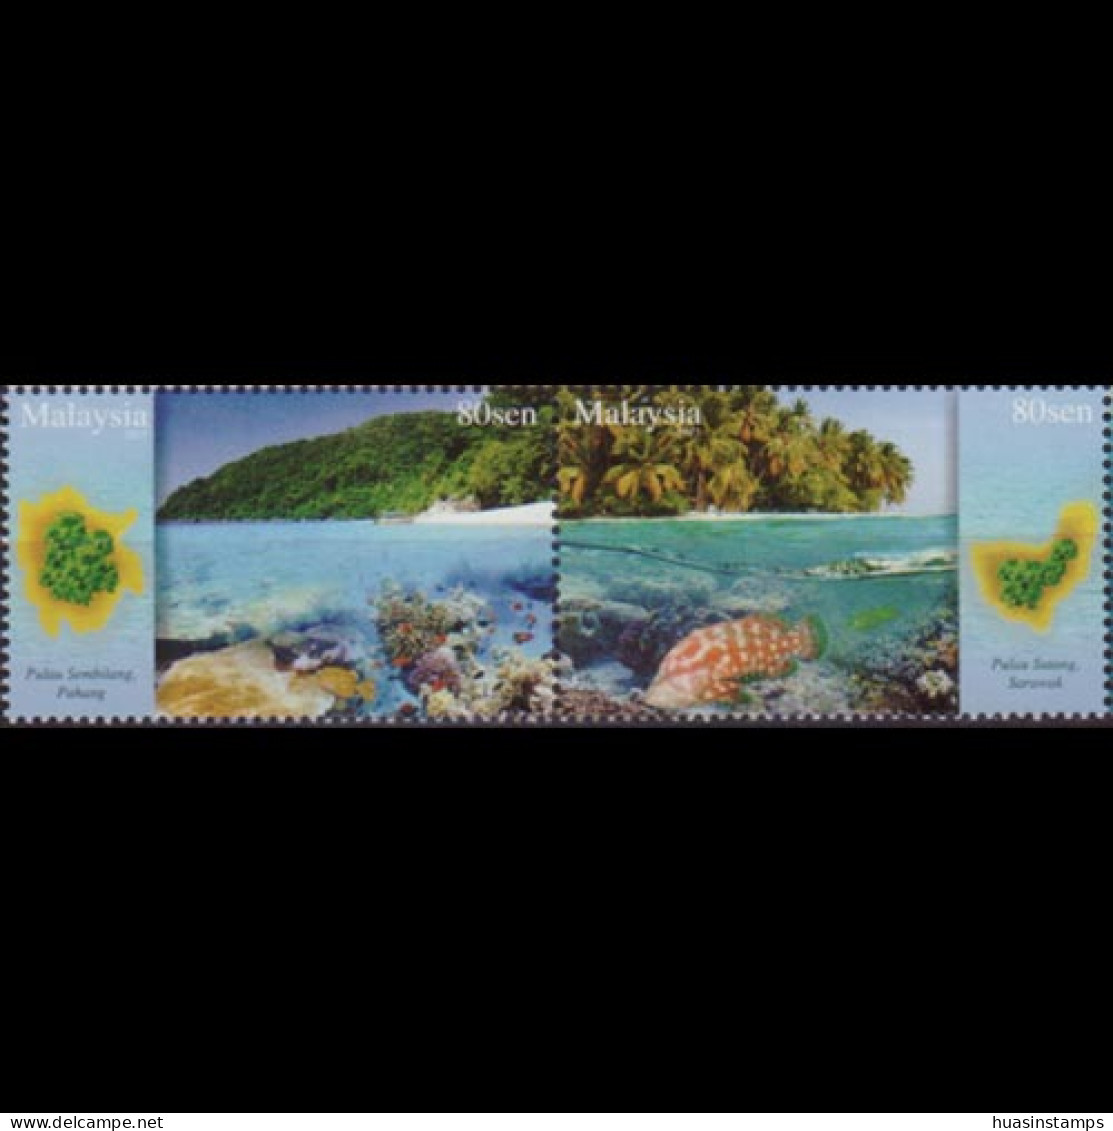 MALAYSIA 2015 - Scott# 1571c-d Islands Views 80c MNH - Malaysia (1964-...)